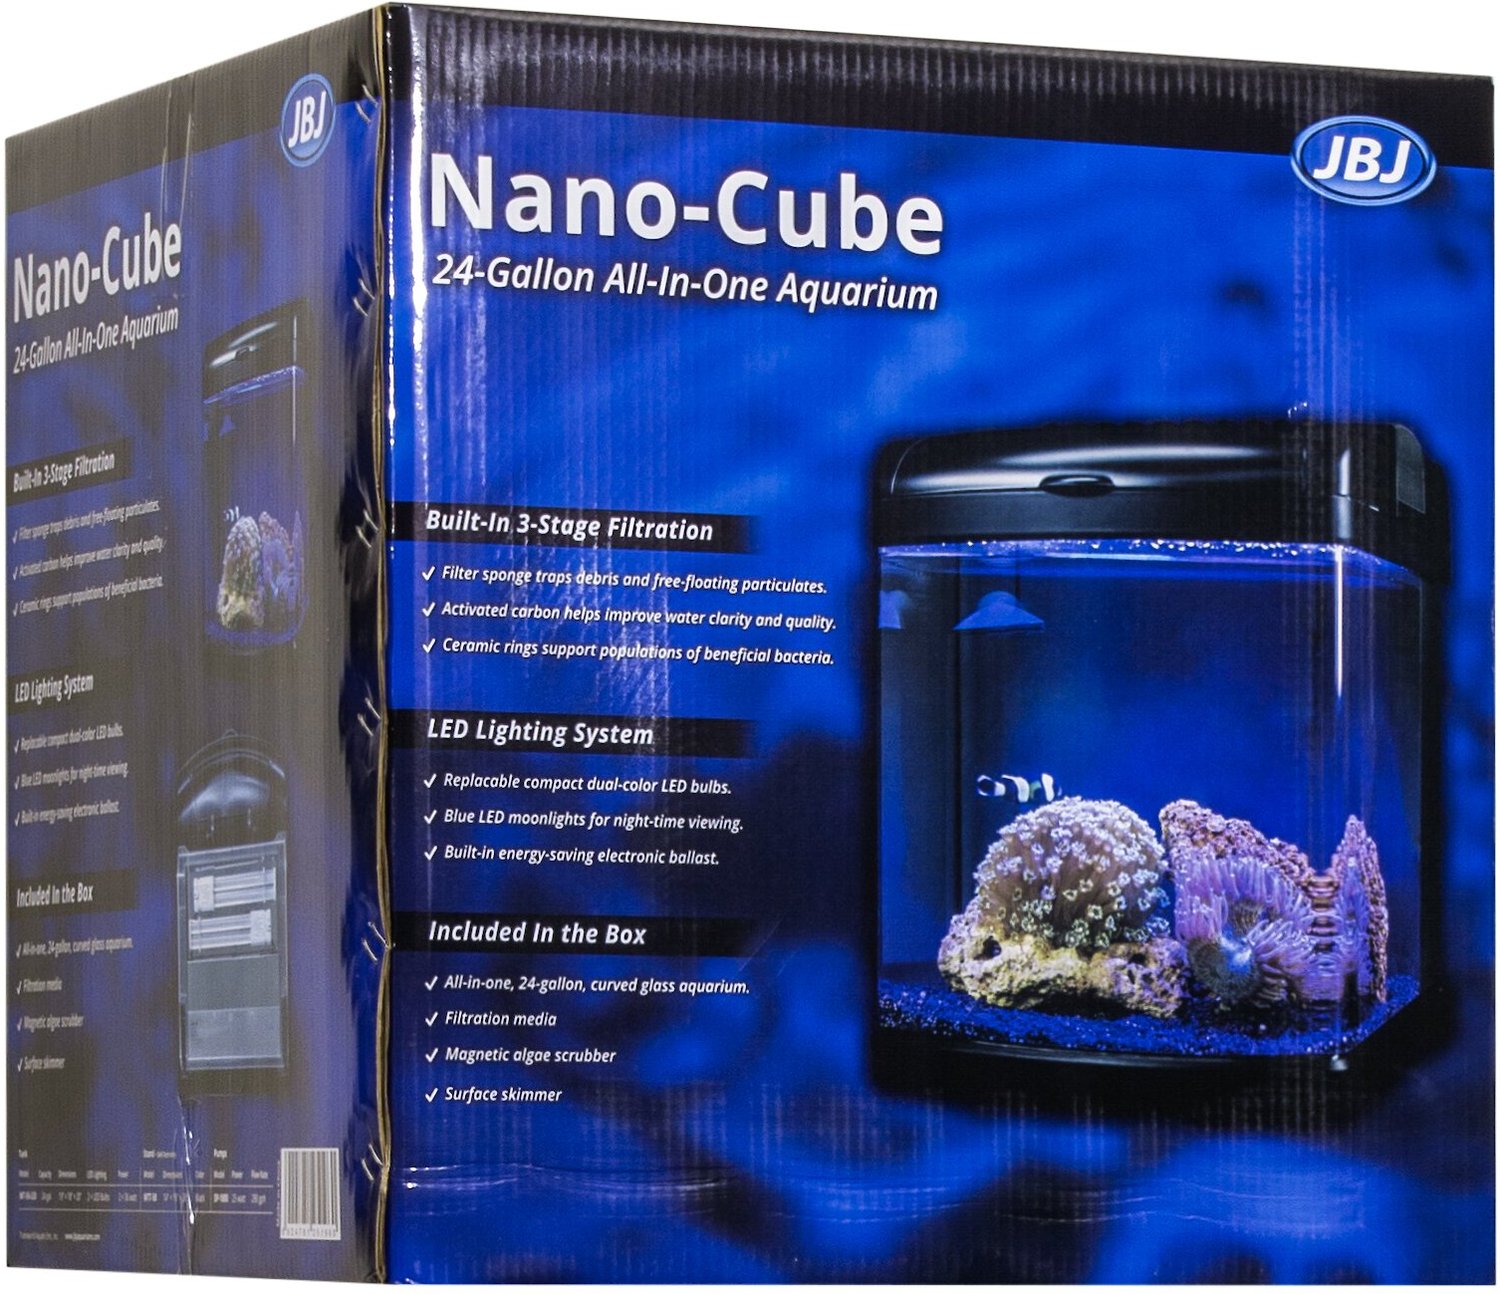 is meer dan Schiereiland Vreemdeling JBJ AQUARIUM Nano-Cube DX LED Curved Glass Fish Aquarium, 24-gal - Chewy.com